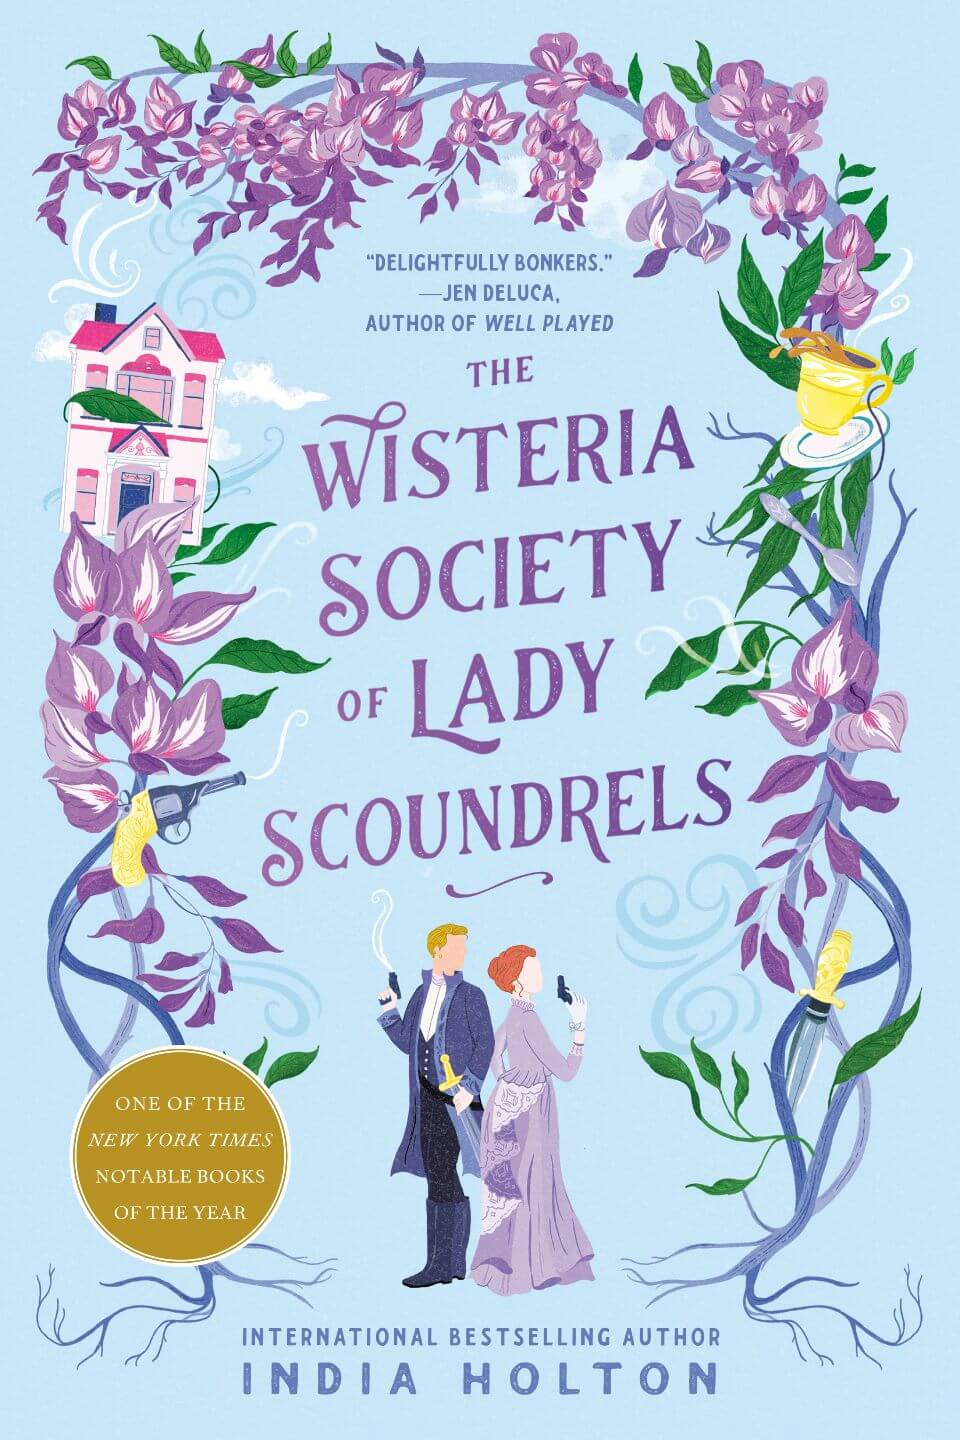 The wisteria society book cover